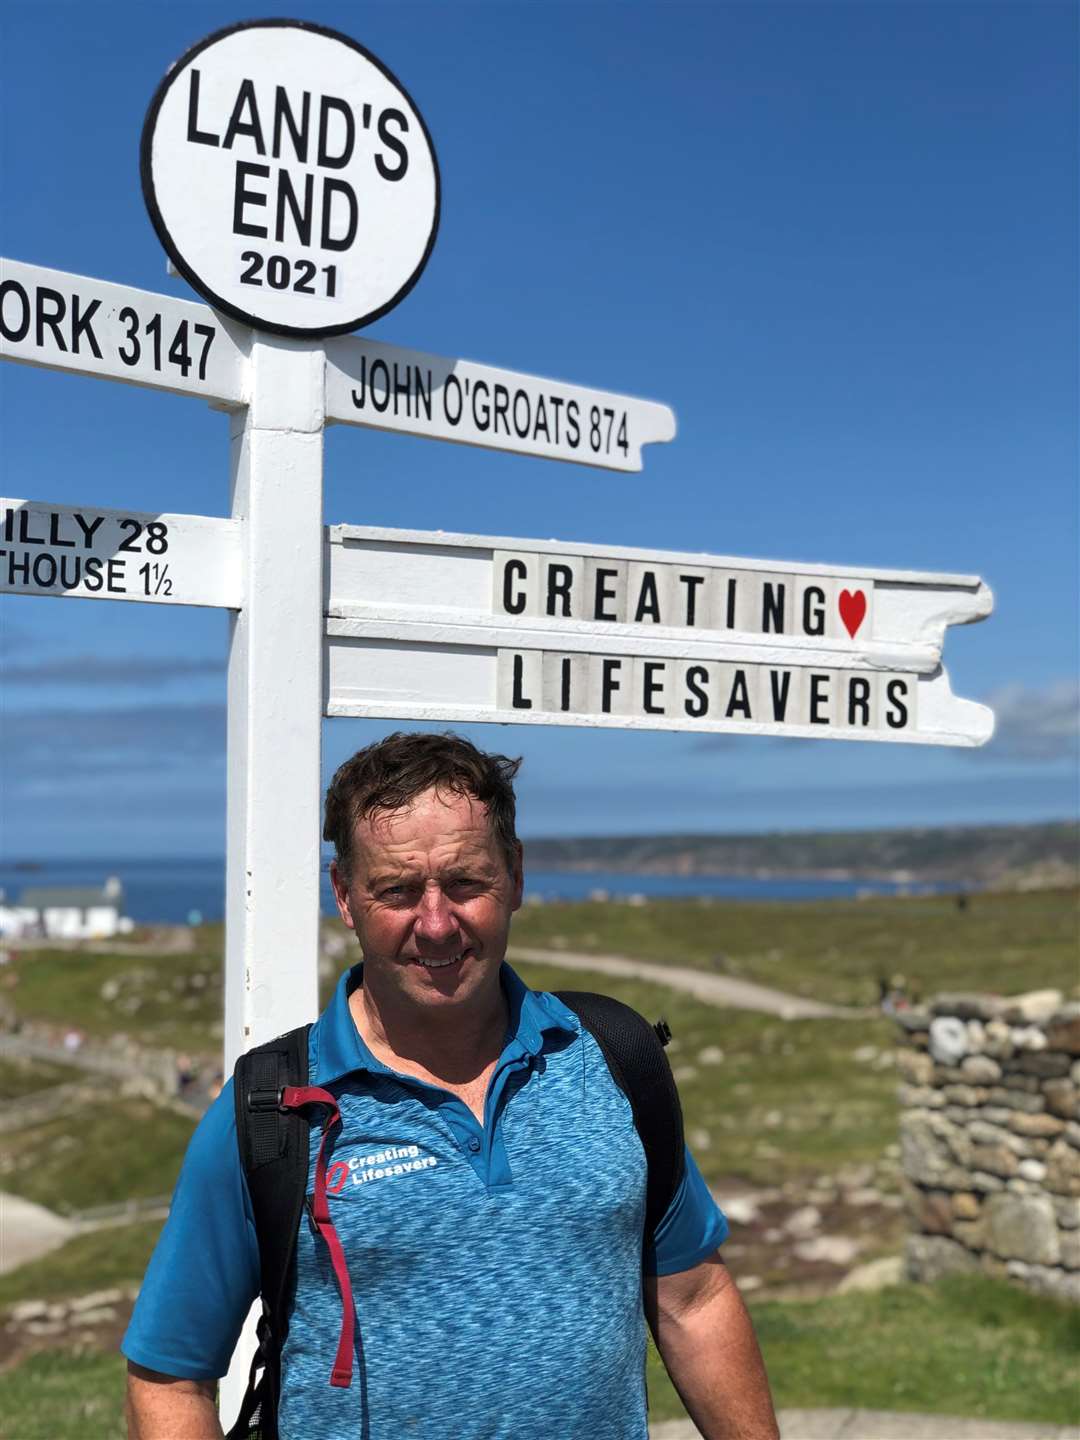 David sullivan at Land's End after completing his marathon trek from John O'Groats